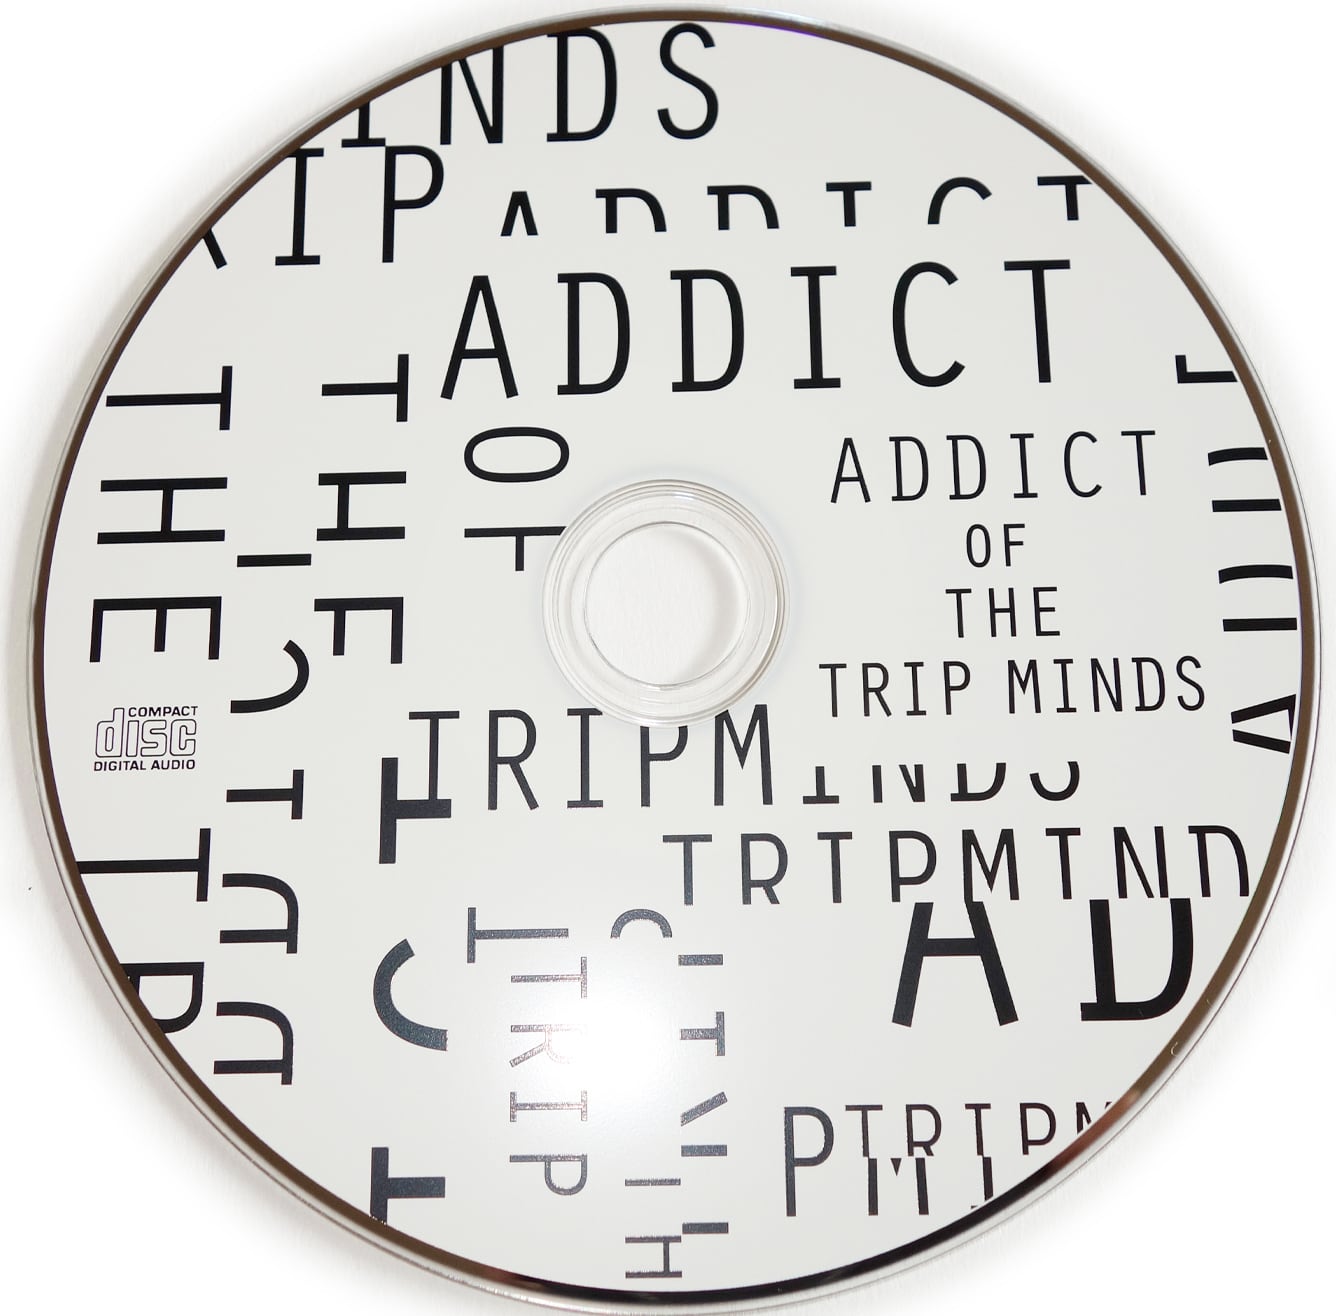 Addict of the trip minds  1994 初回限定CD